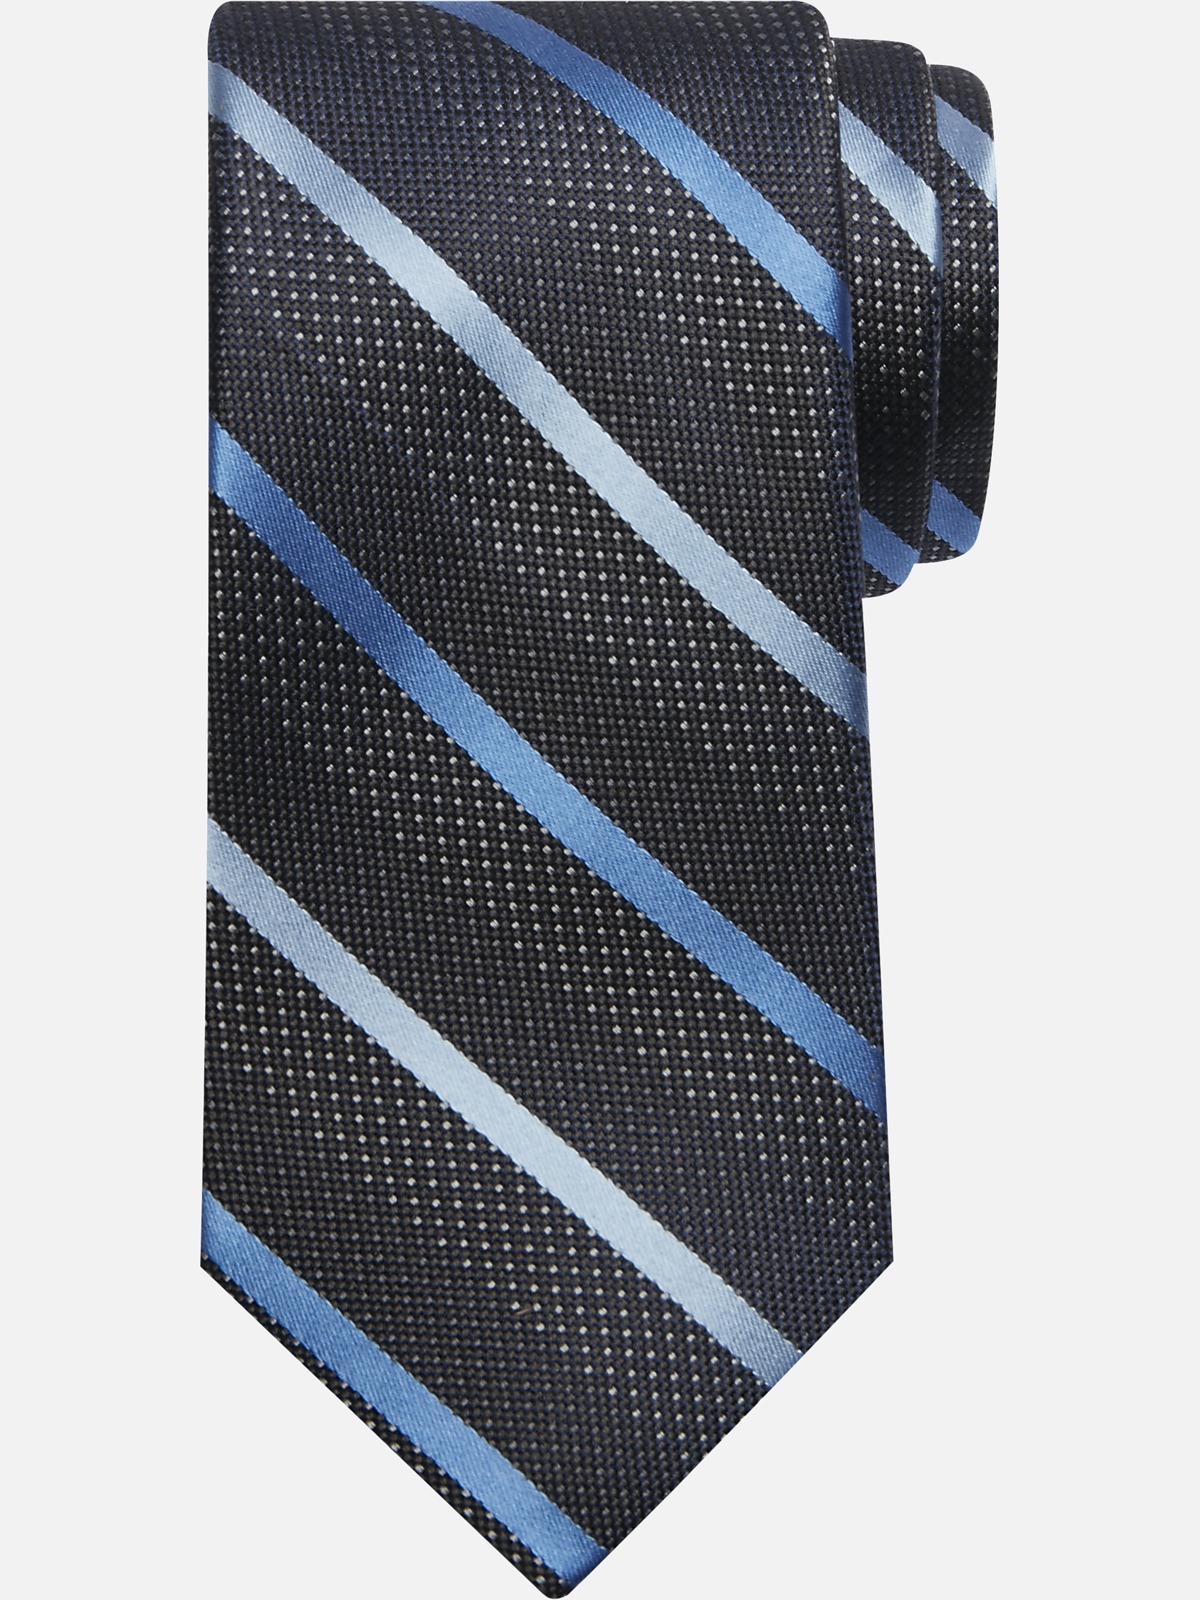 Joseph Abboud Textured Stripe Tie | All Clearance $39.99| Men's Wearhouse